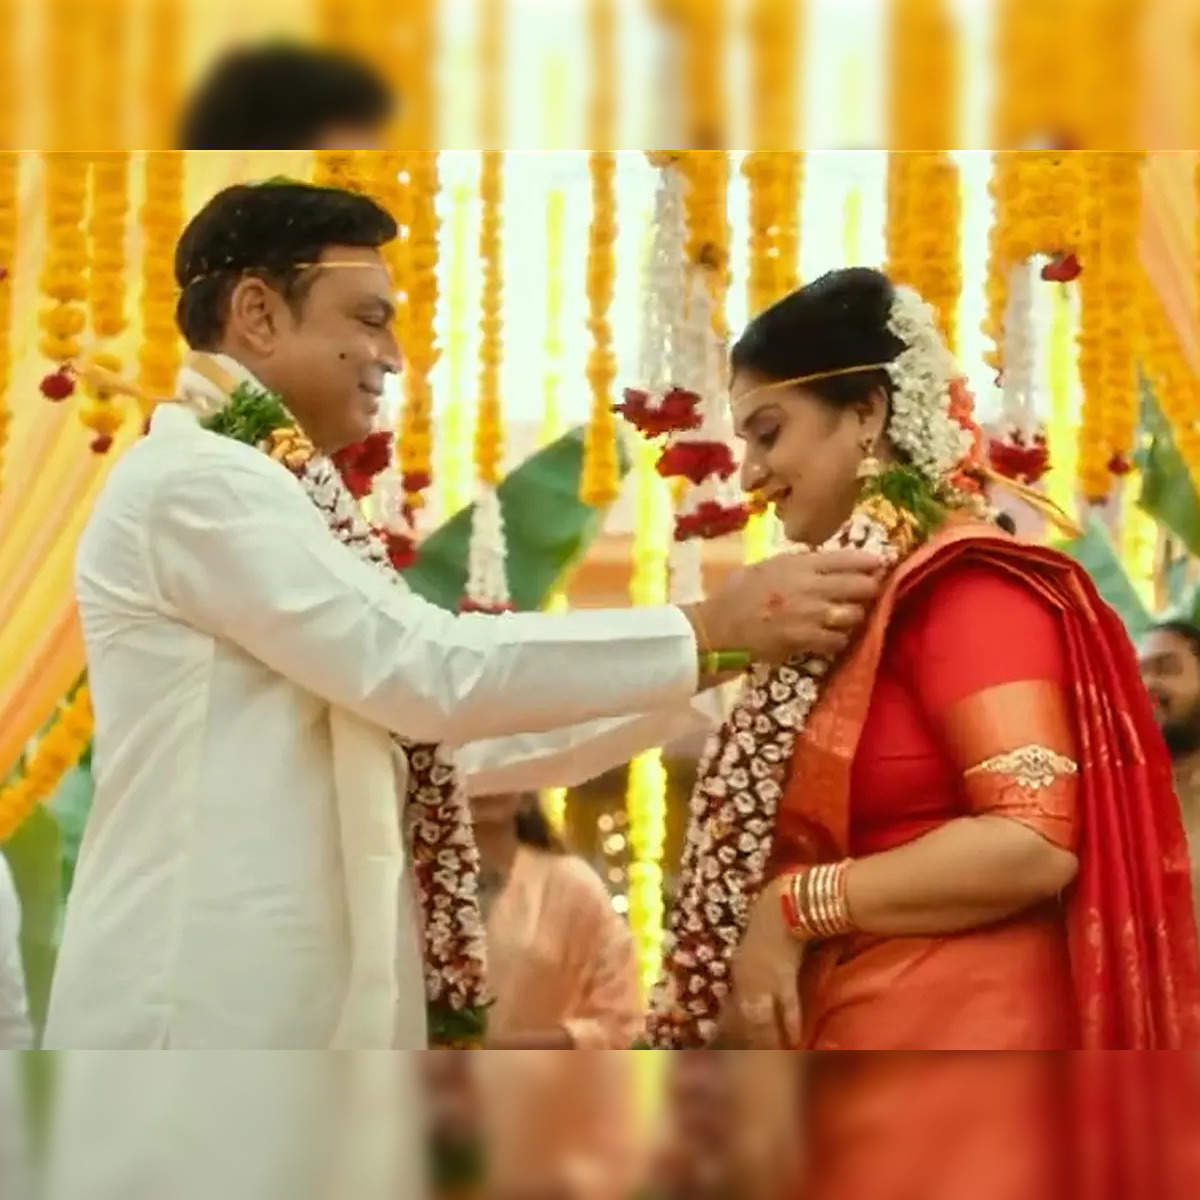 Pavithra Lokesh Xxx - Naresh Pavithra Lokesh wedding: Telugu star Naresh marries co-star Pavithra  Lokesh in an intimate ceremony - The Economic Times